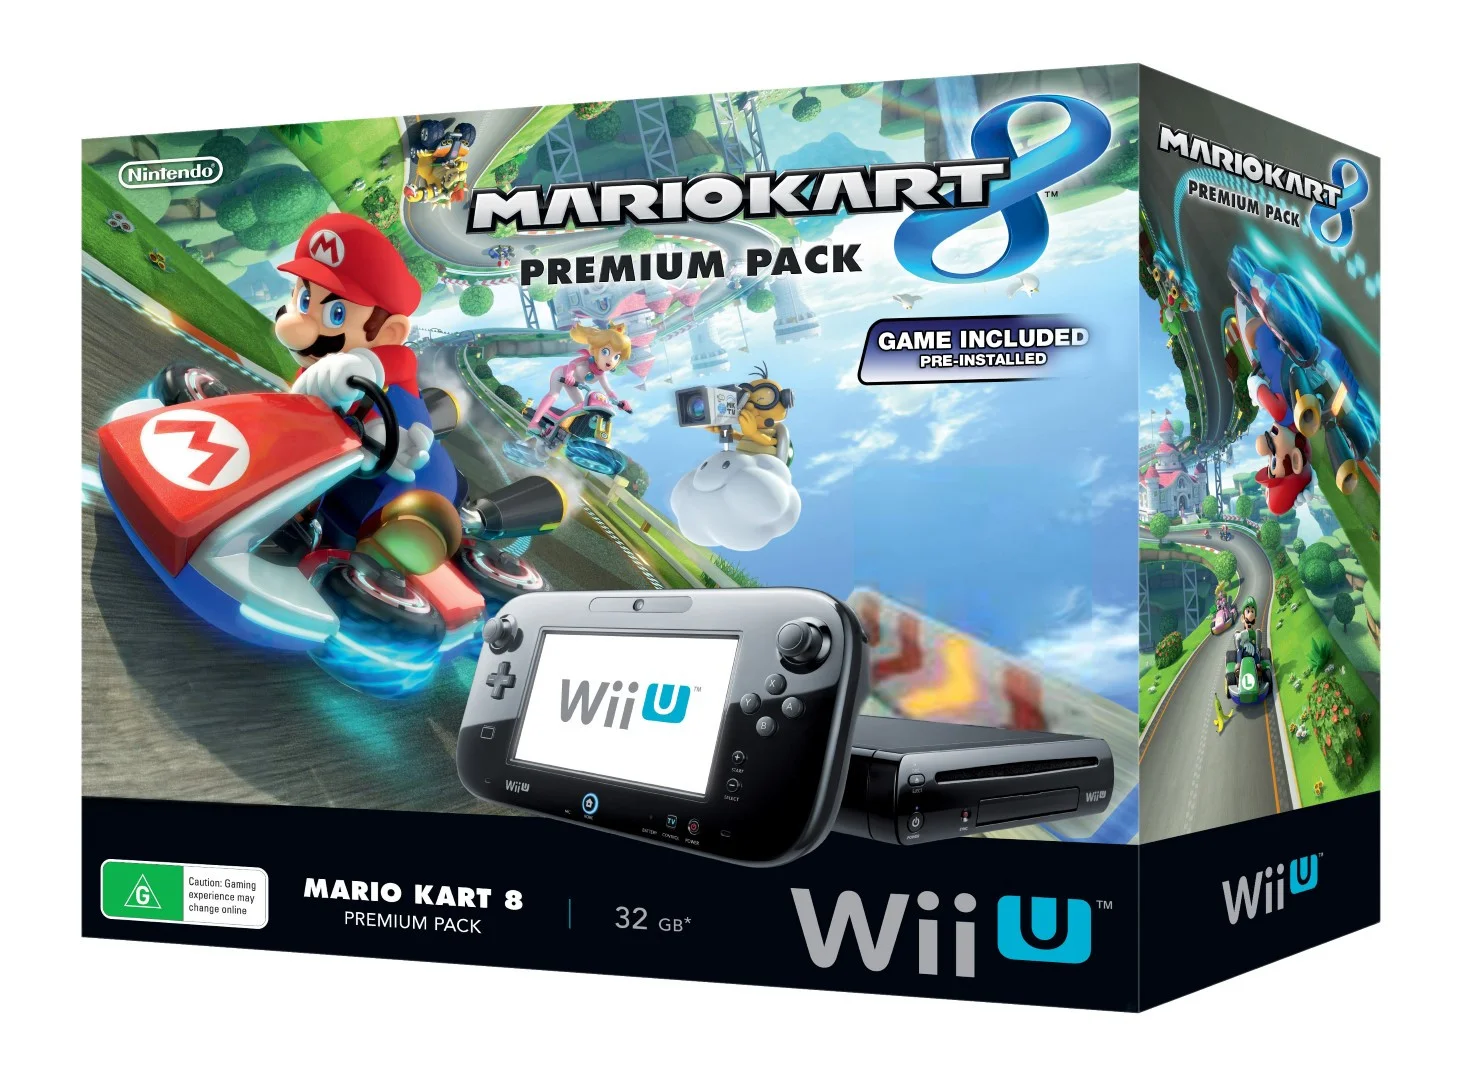 Игровая приставка Nintendo Wii u Premium Pack. Mario Kart 8 Wii u. Консоль игровая приставка Nintendo Wii u Premium Pack. Wii u Mario Kart 8 Premium Pack.